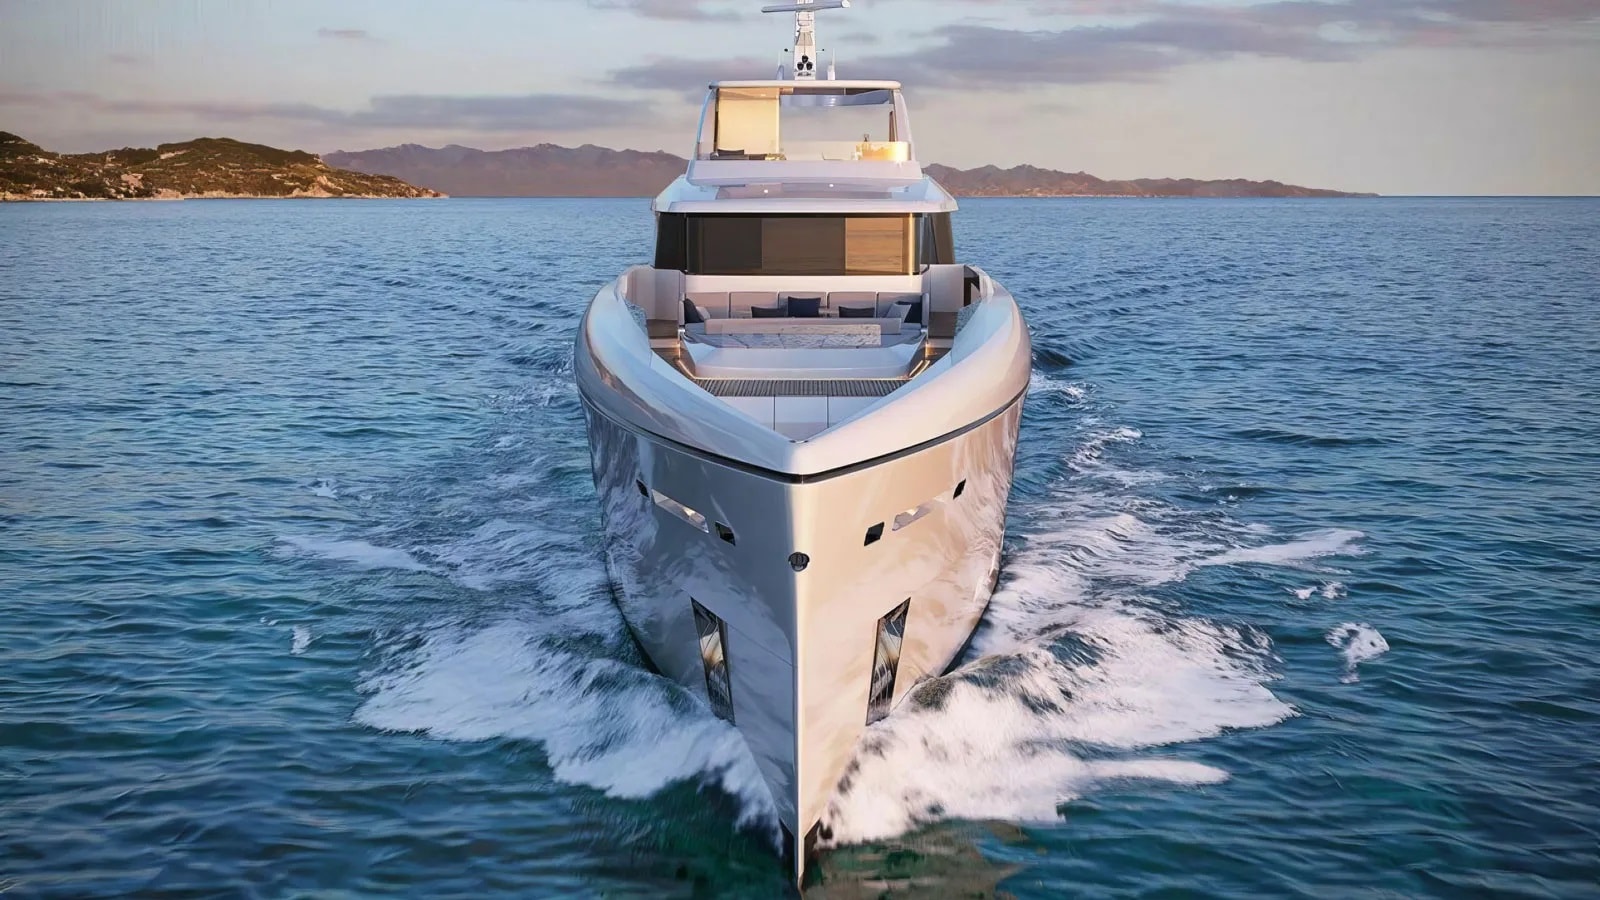 Vitruvius Palm Beach Innovative Superyacht Concept for US Buyers